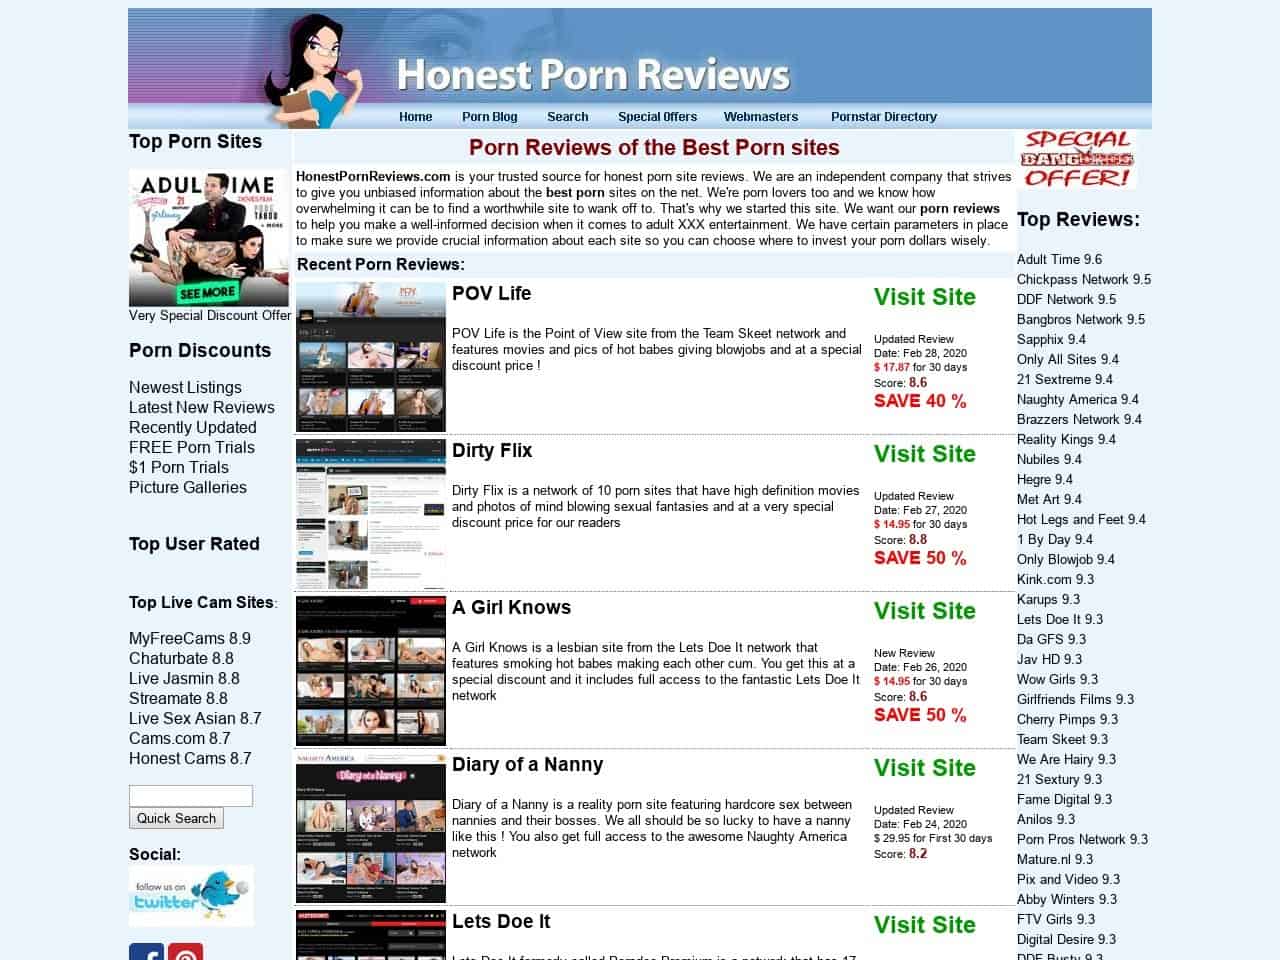 Reviews of porn sites